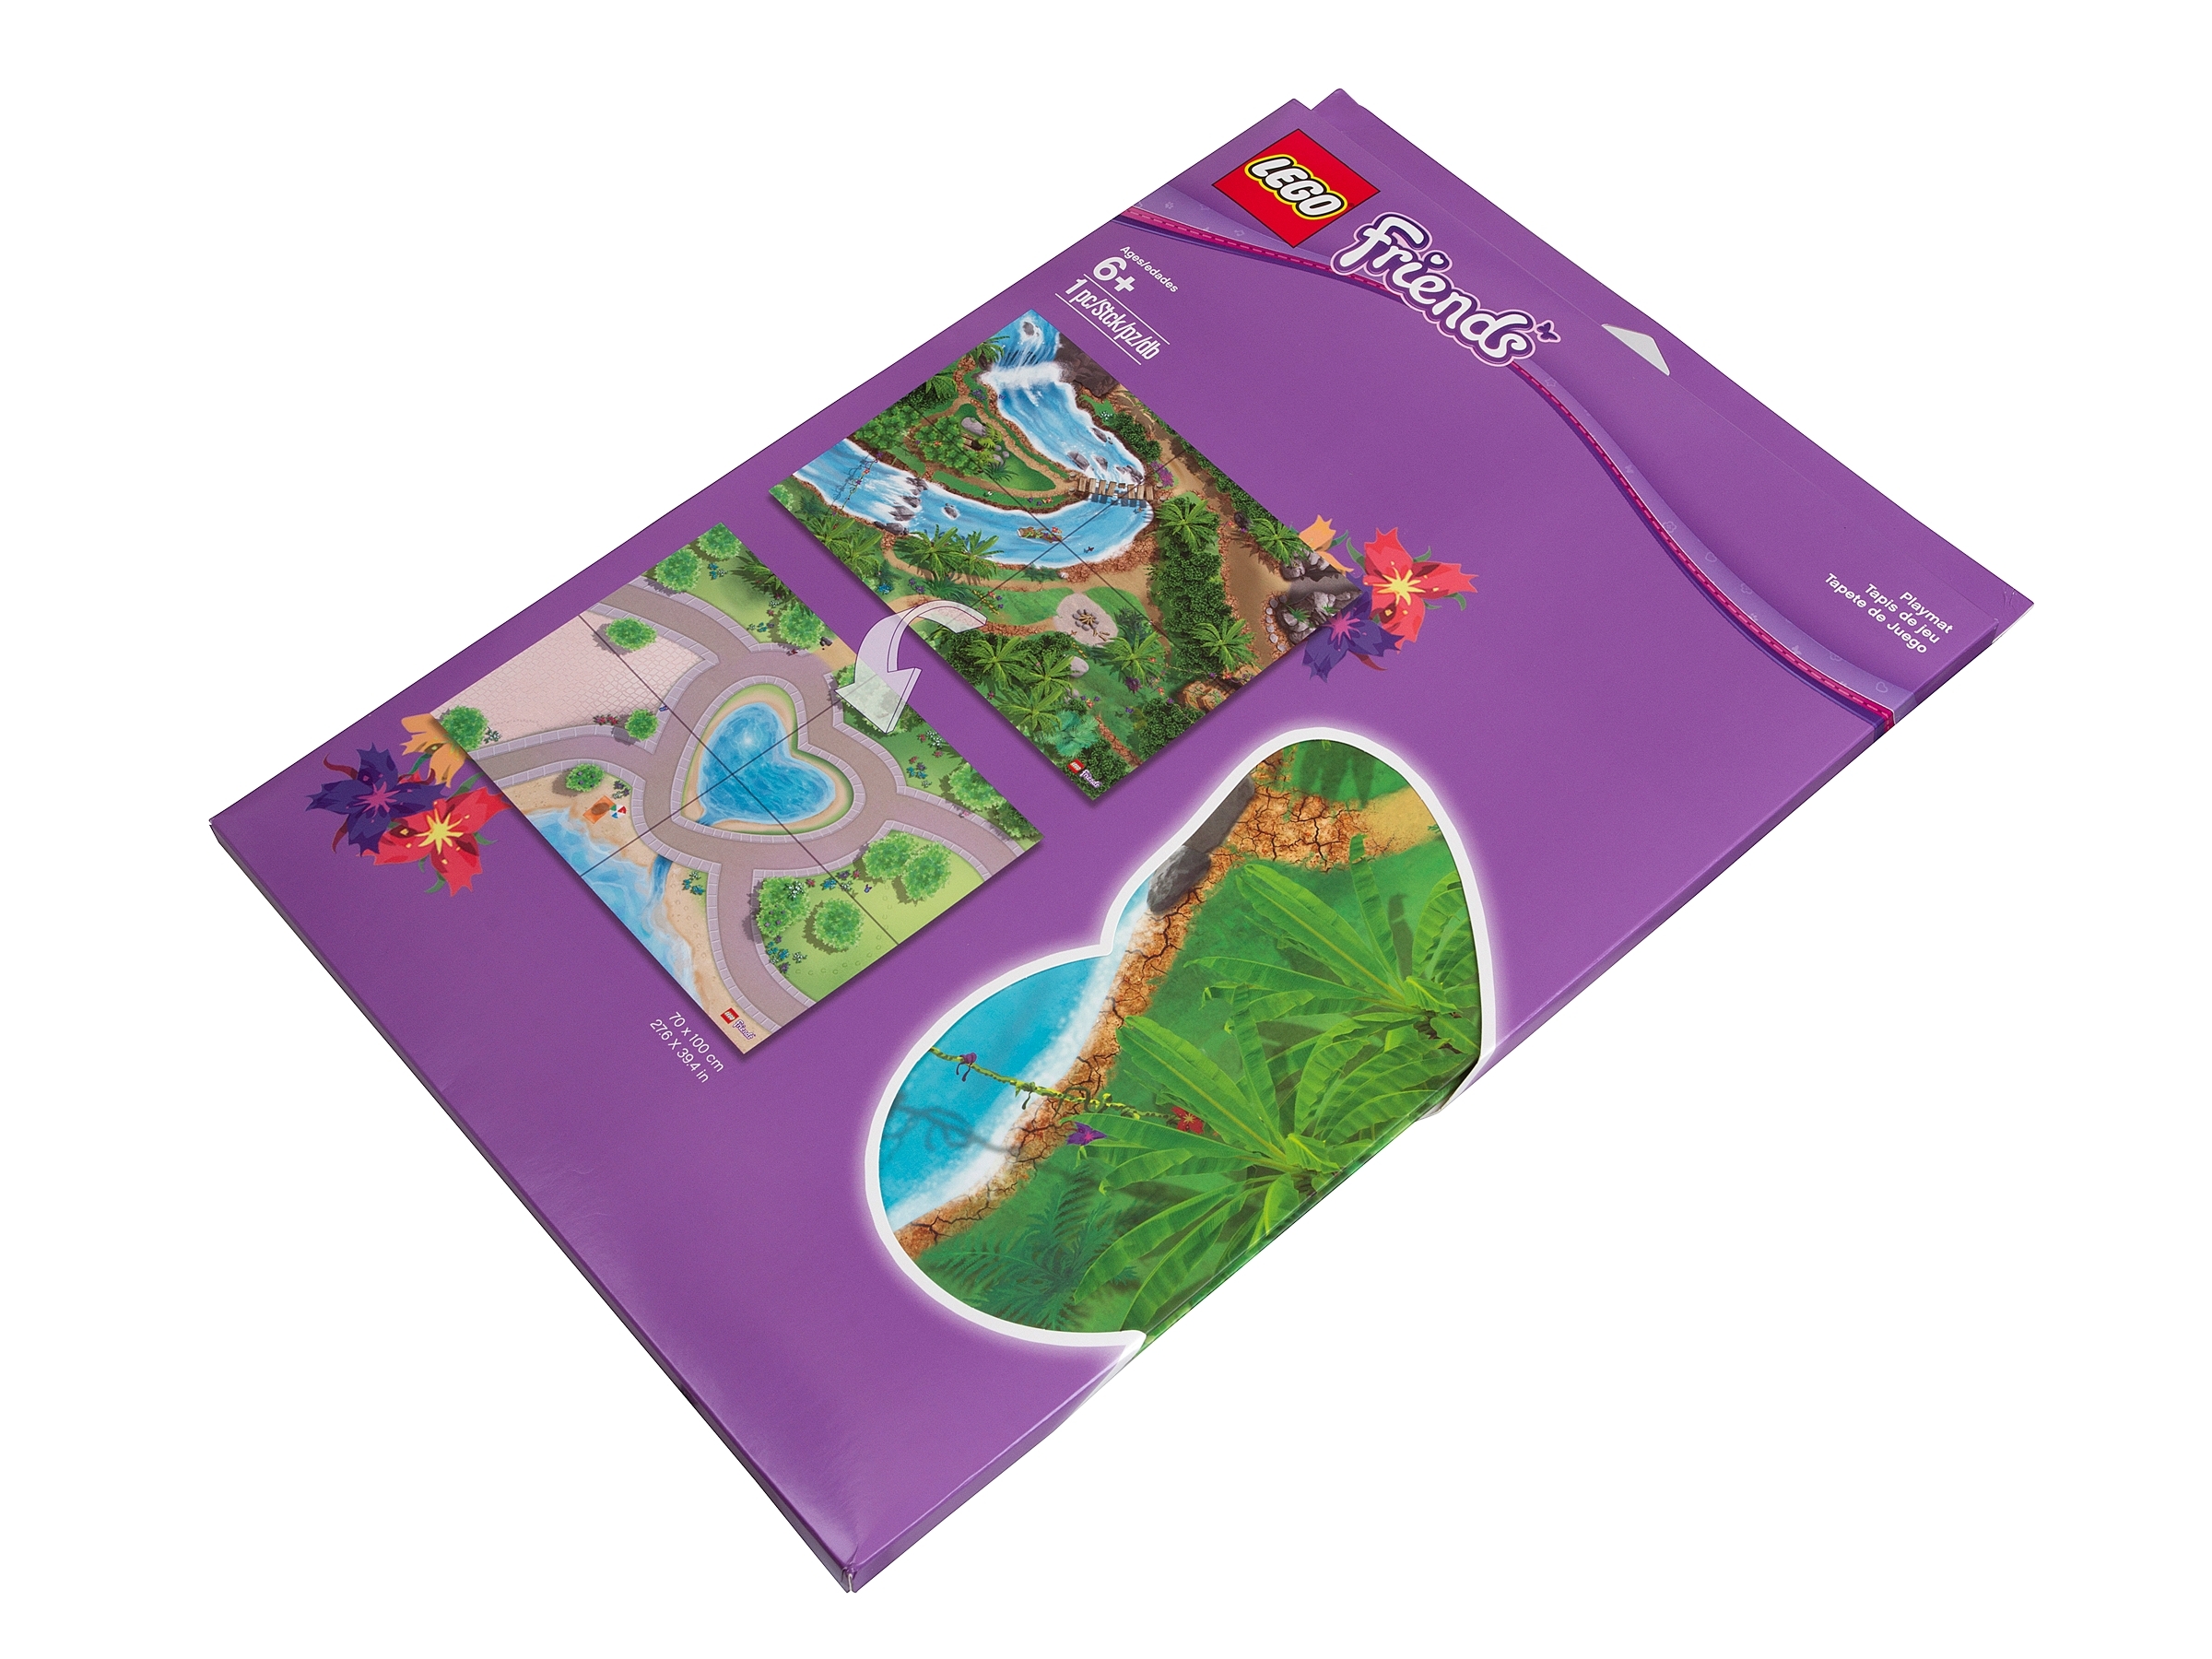 Playmat 851325 | Friends | online at the Official LEGO® Shop DK